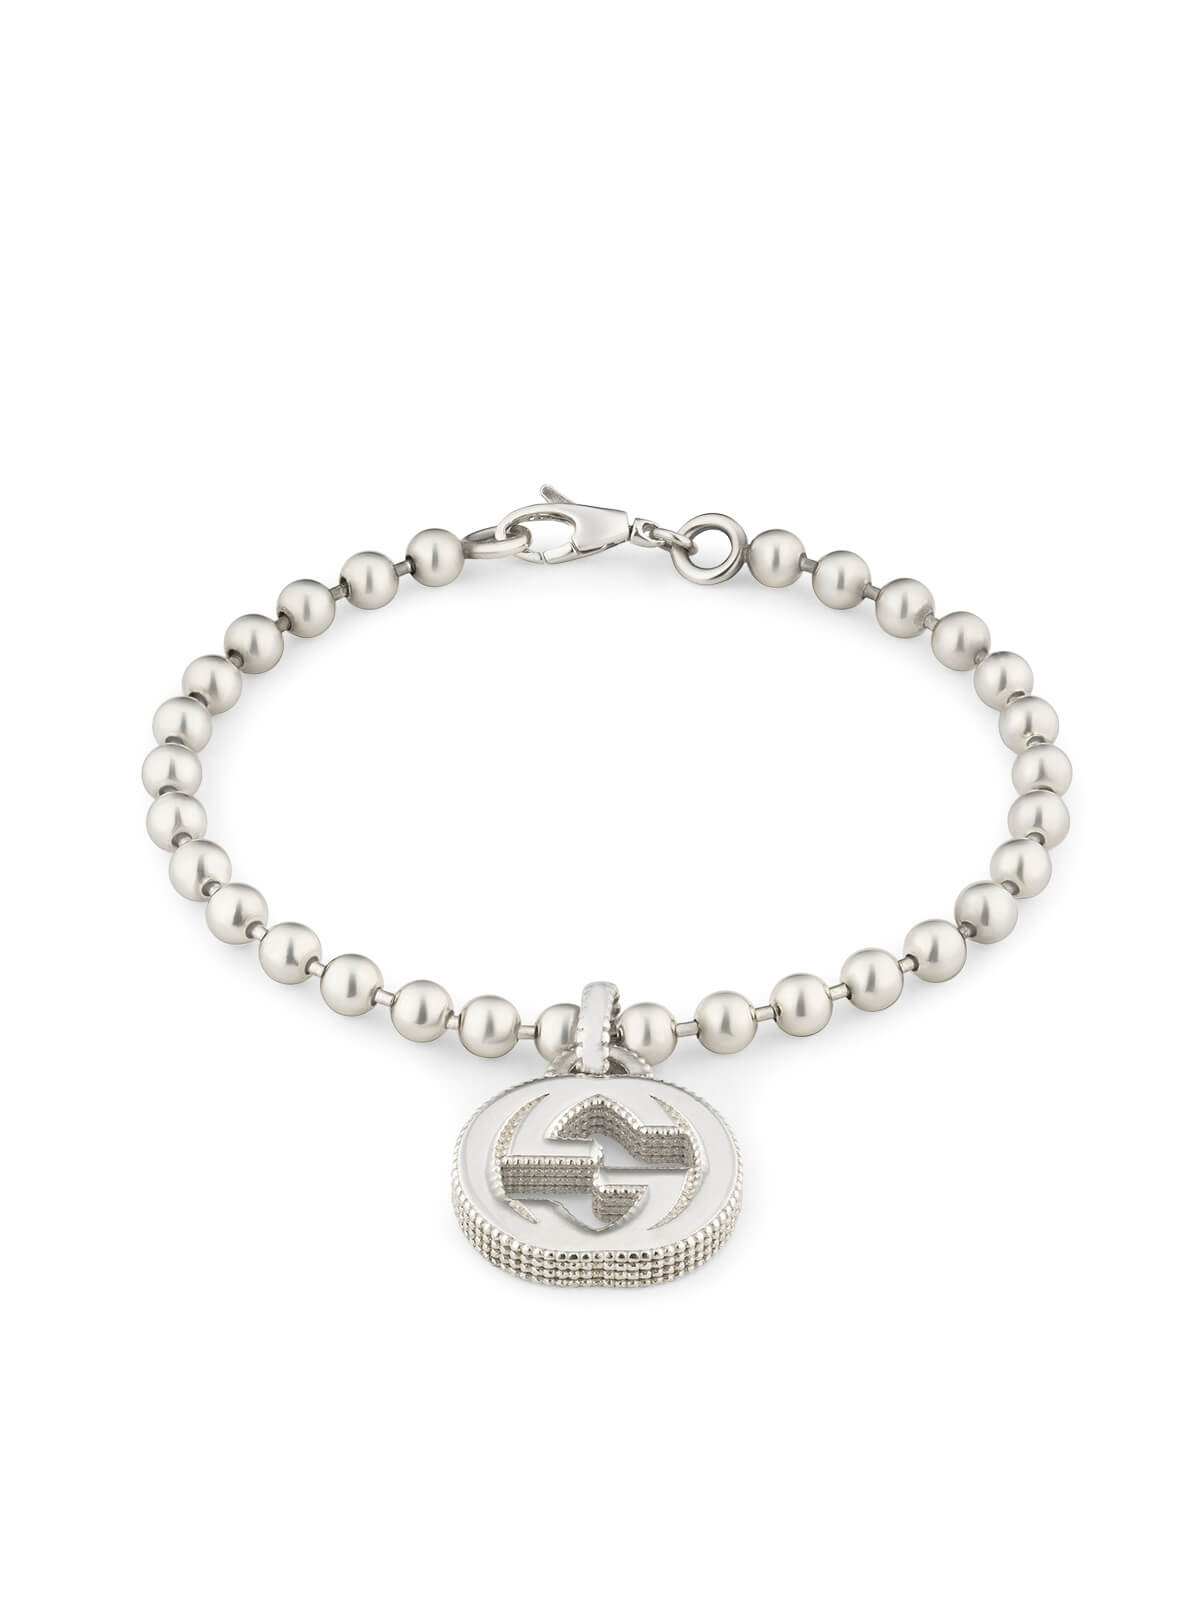 Gucci Interlocking G Bracelet in Silver 16cm YBA479226001016